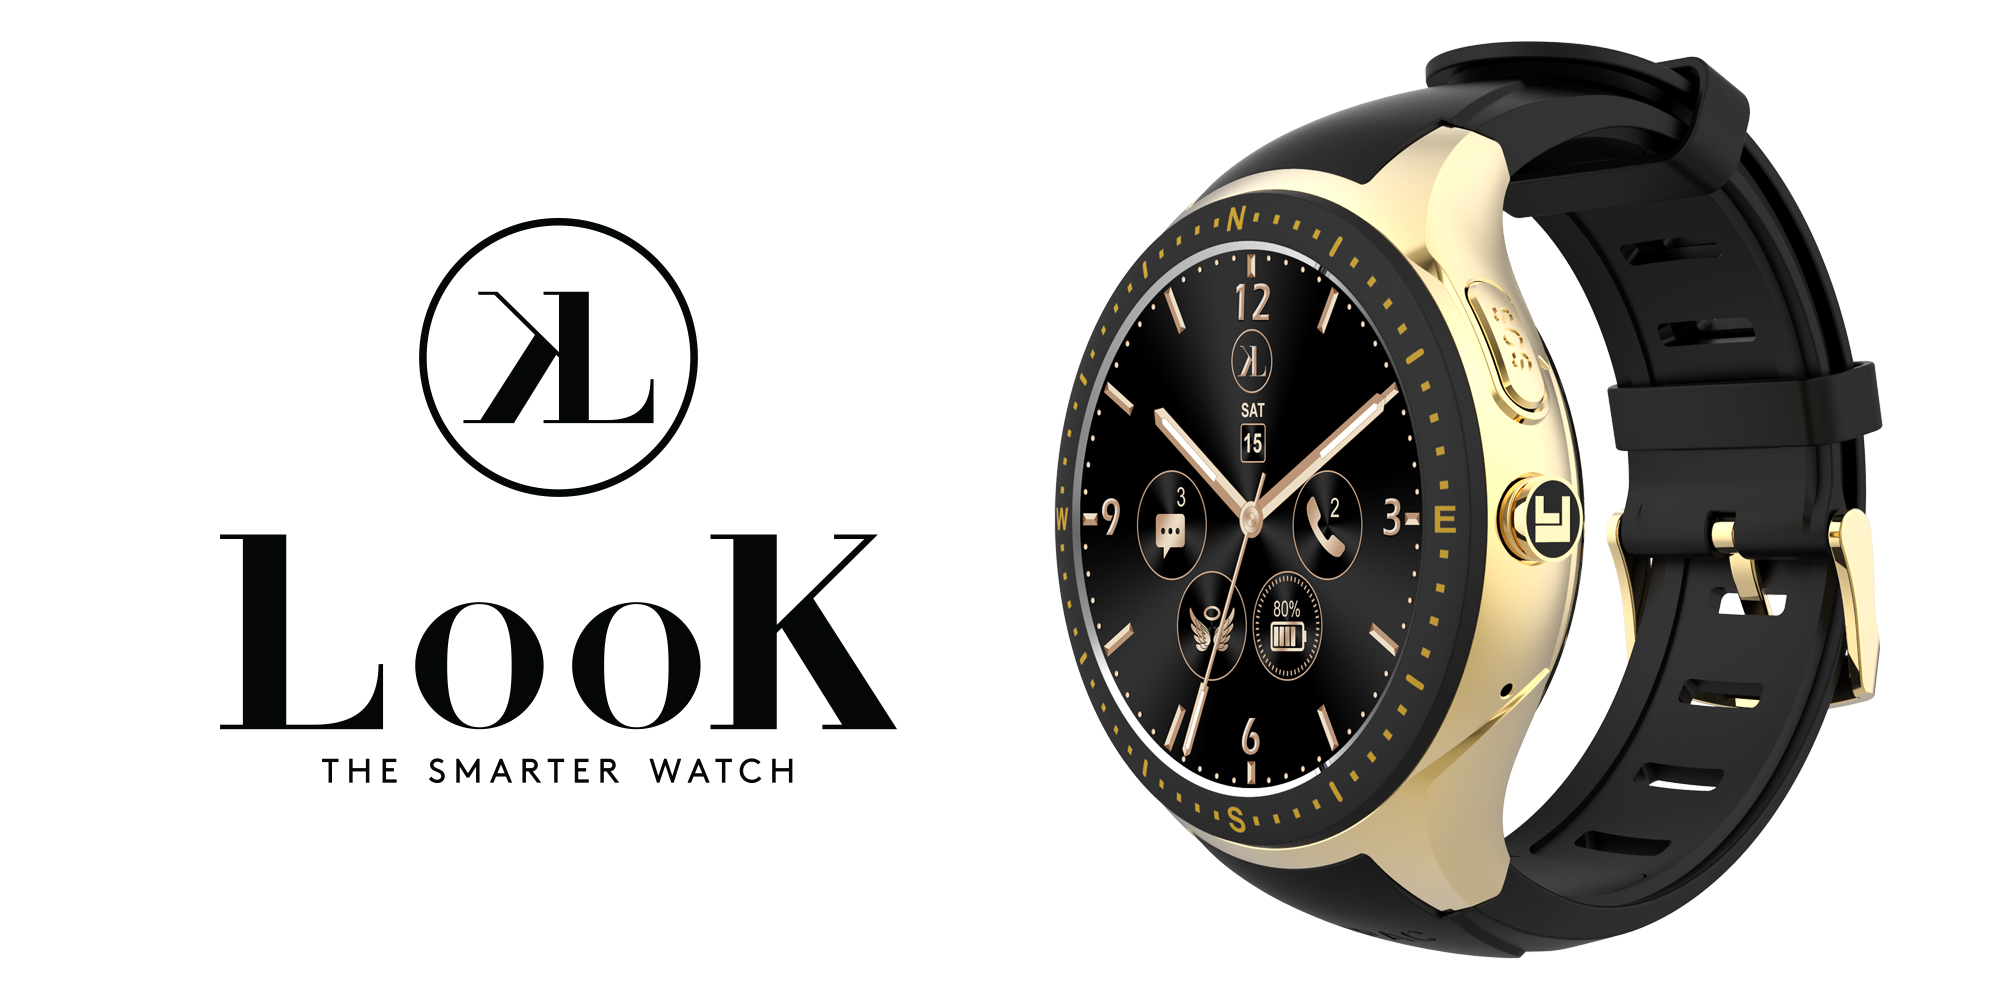 LooK Watch - The Smarter Watch